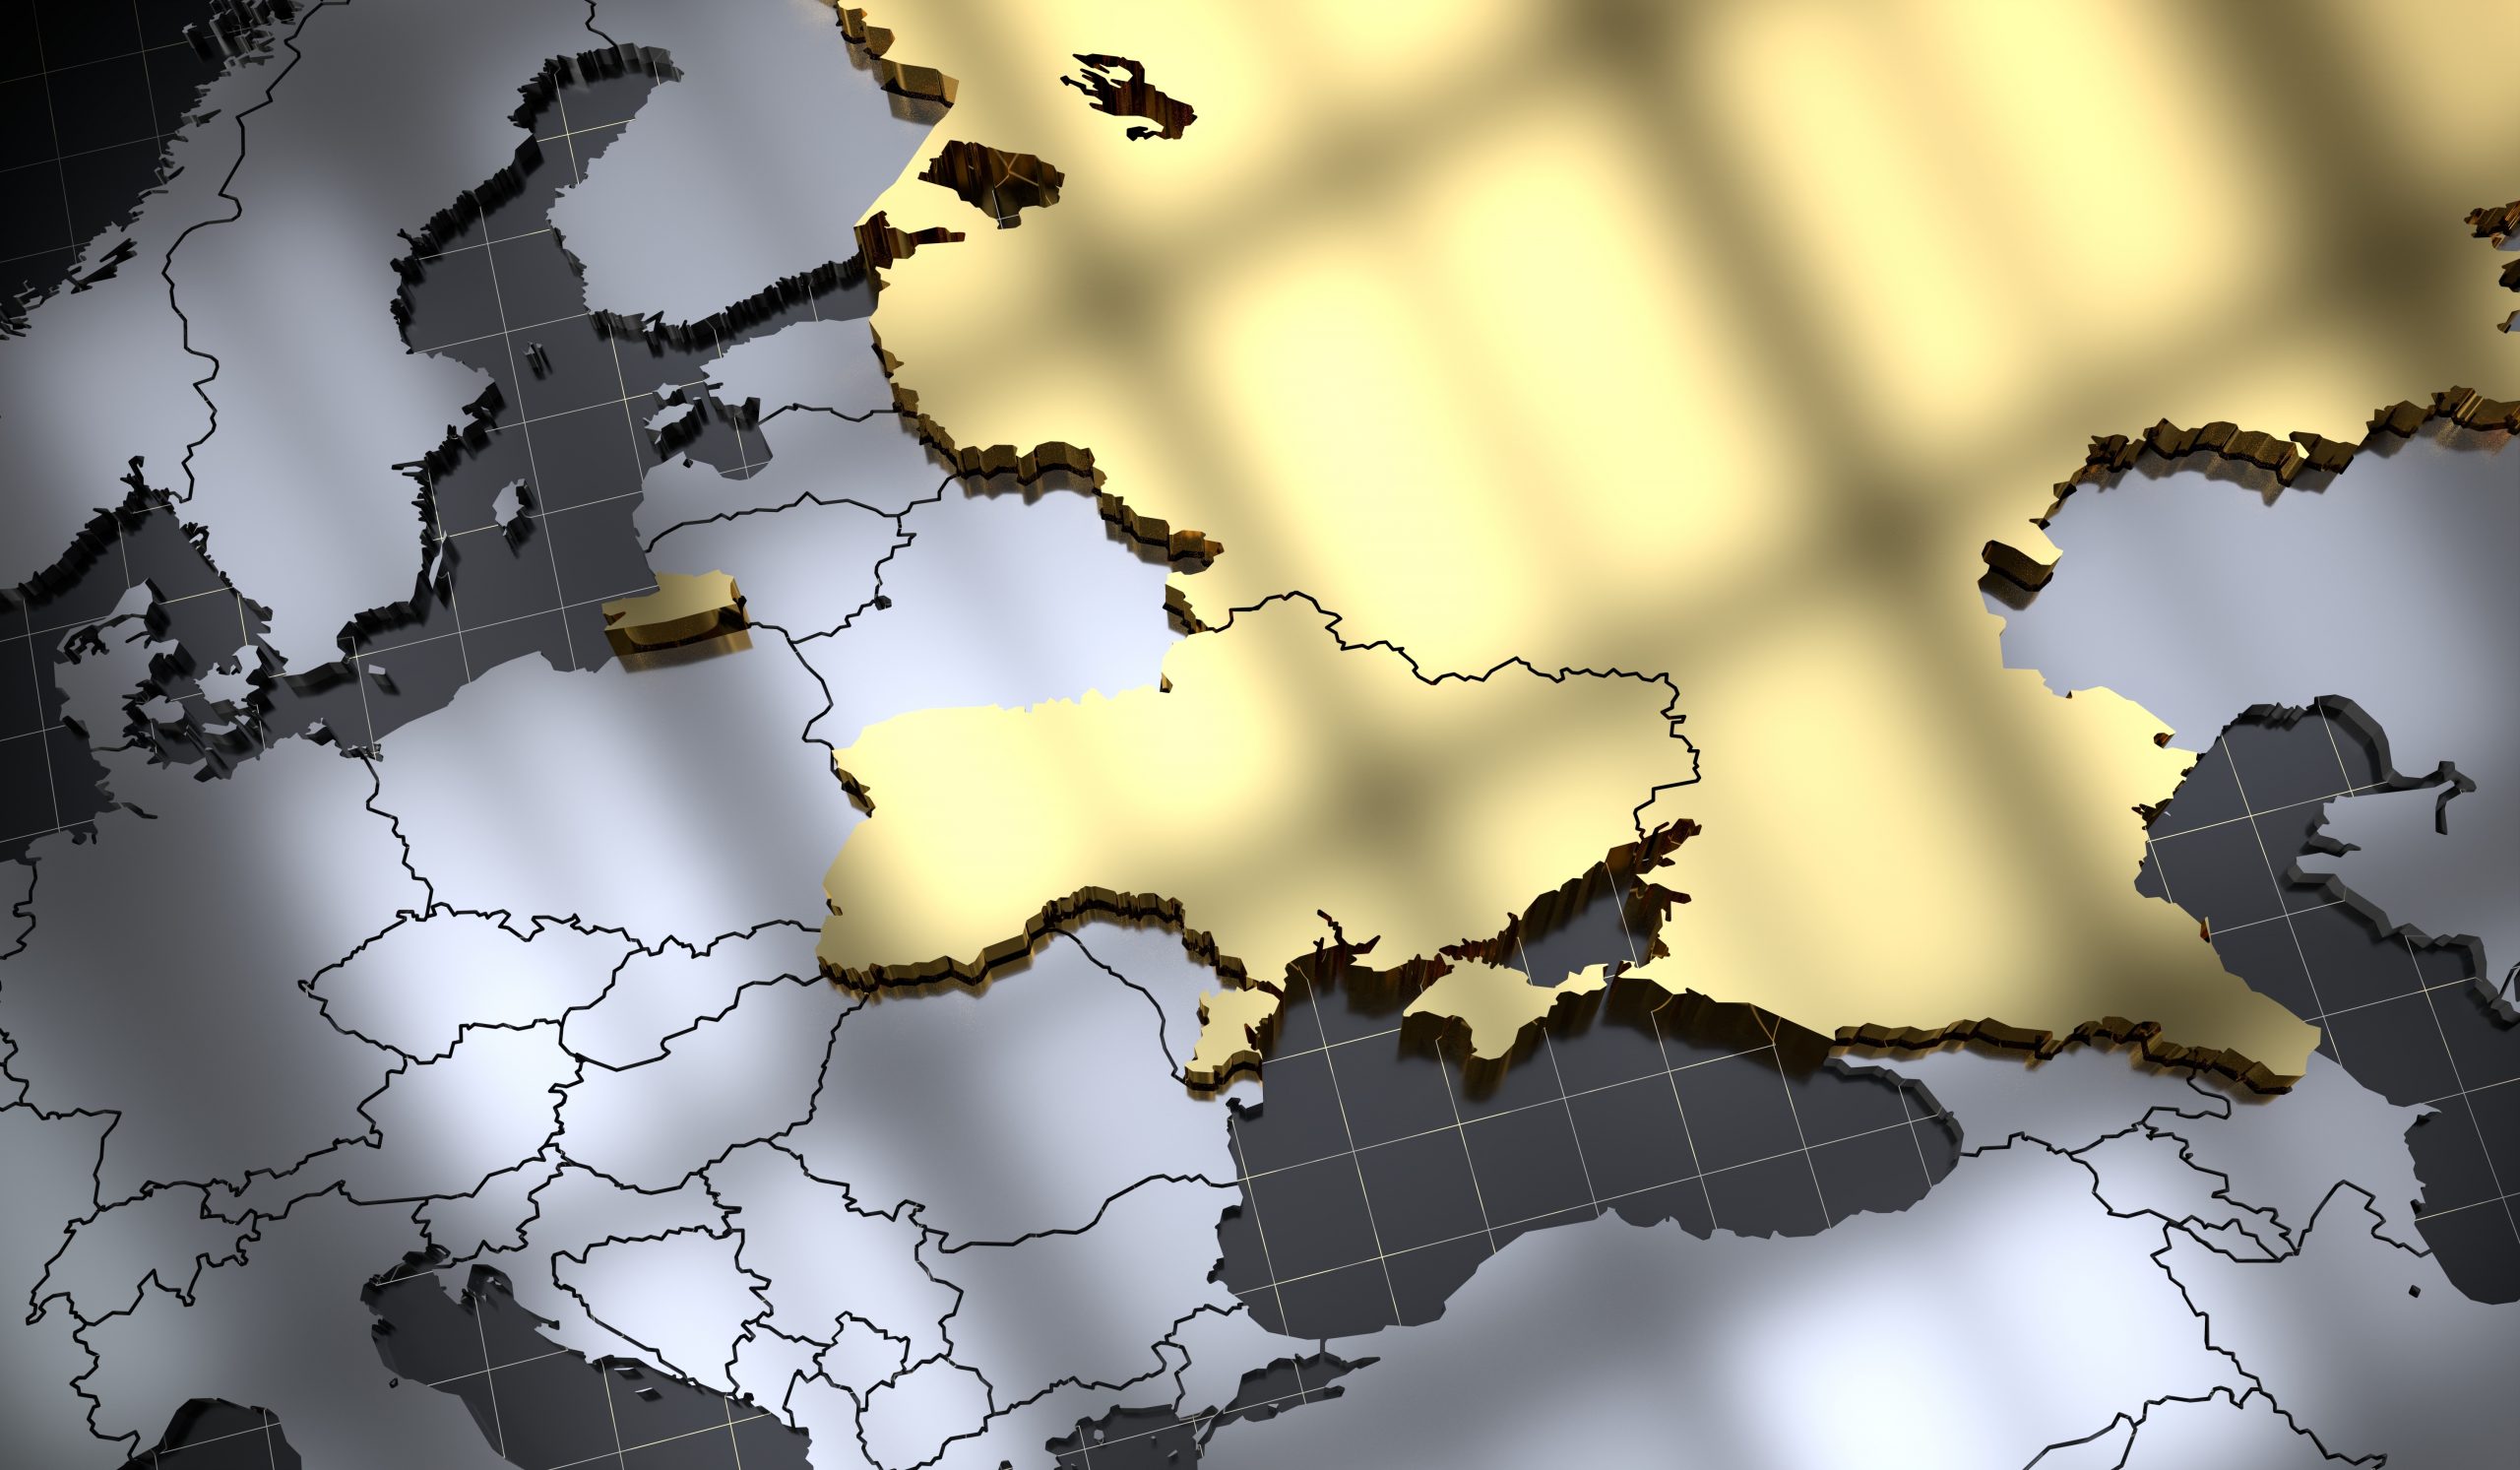 Russia and Ukraine map - 3D illustration